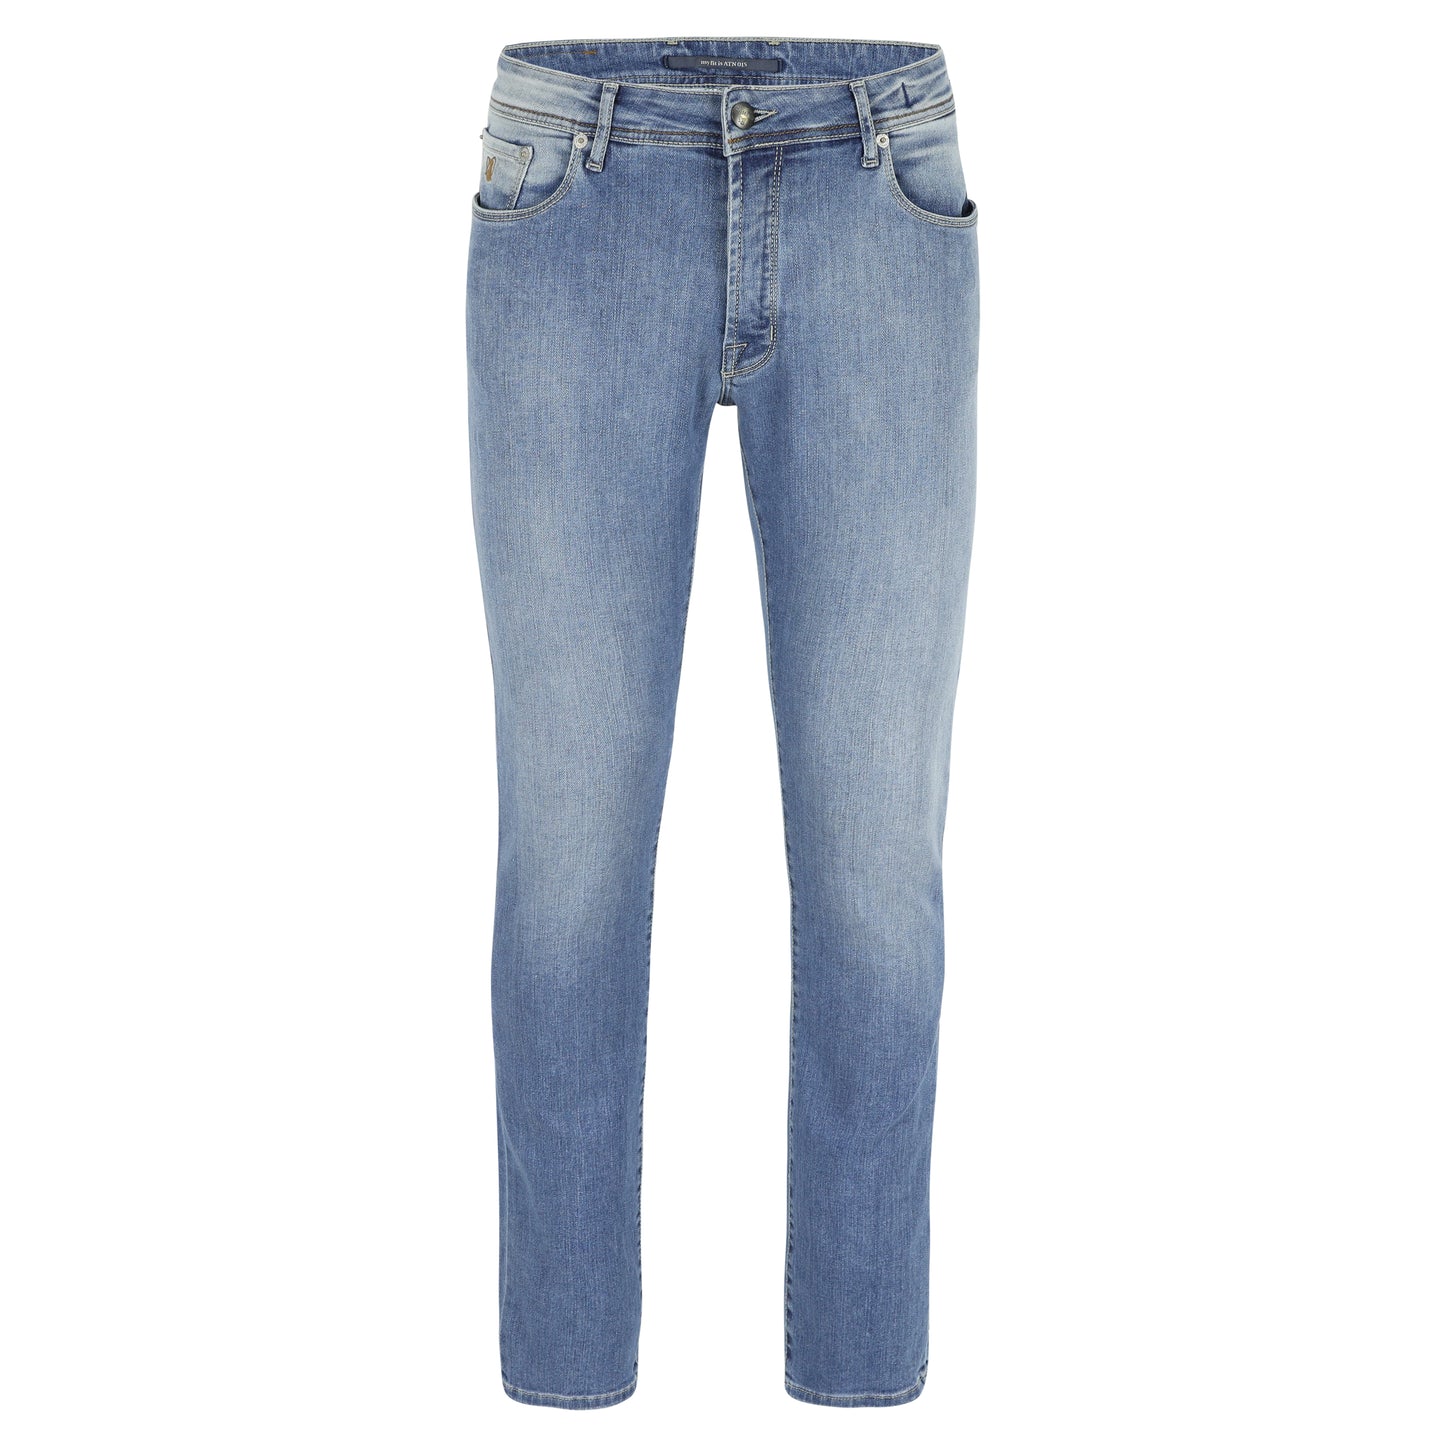 Bleached slim fit jeans Atelier Noterman - 0638/103